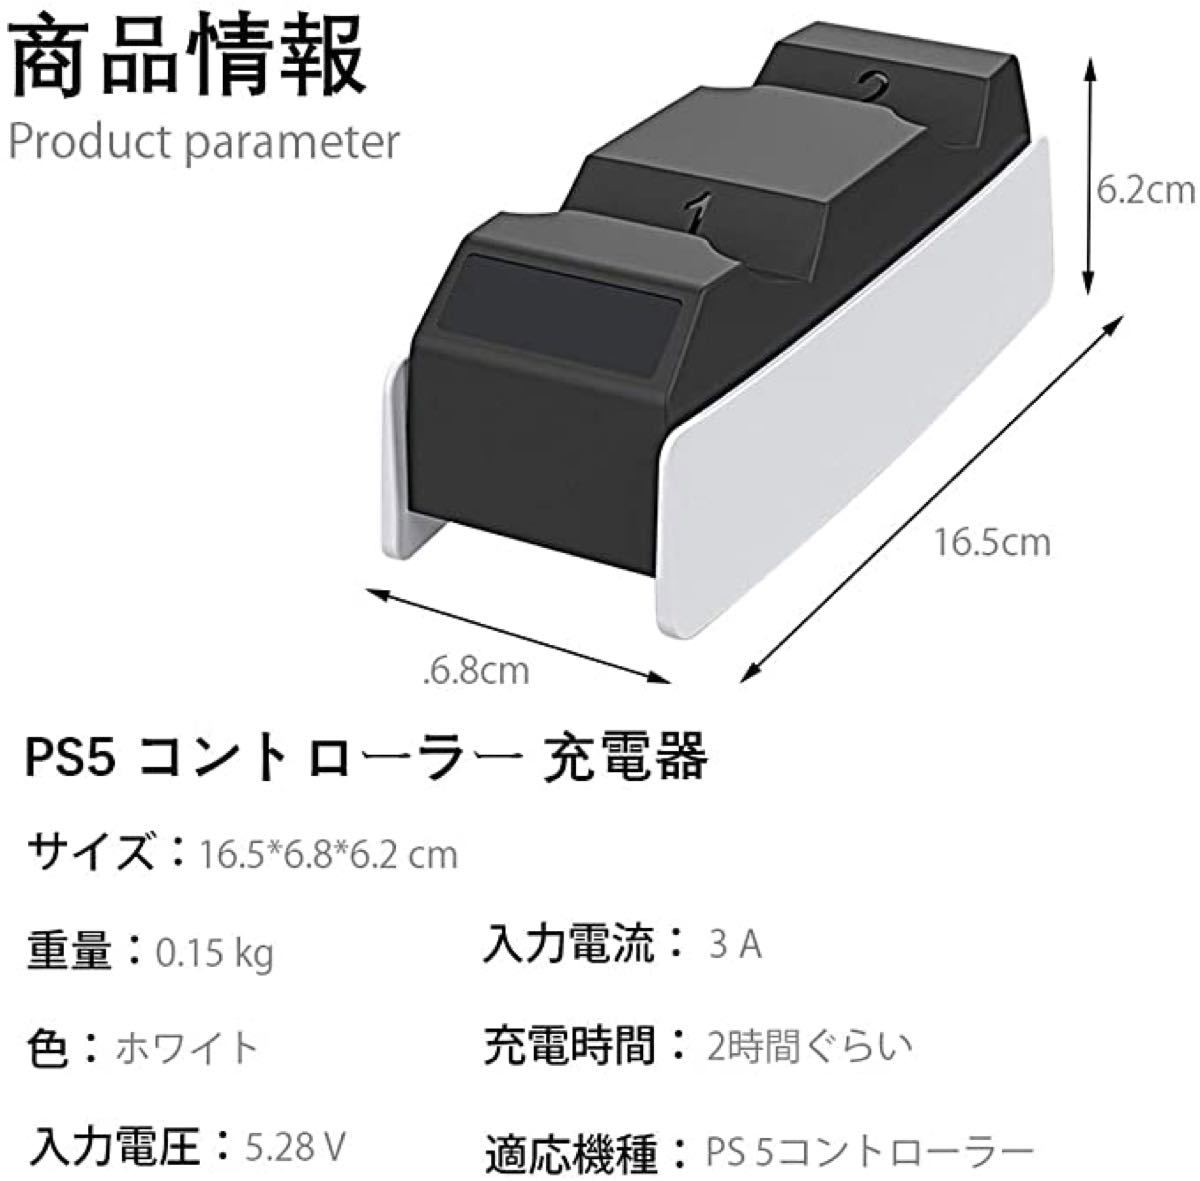 PS5コントローラー 充電器 PS5 スタンド 5V急速充電 過充電防止 2台同時充電可能 滑り止め USBケーブル付き ホワイト